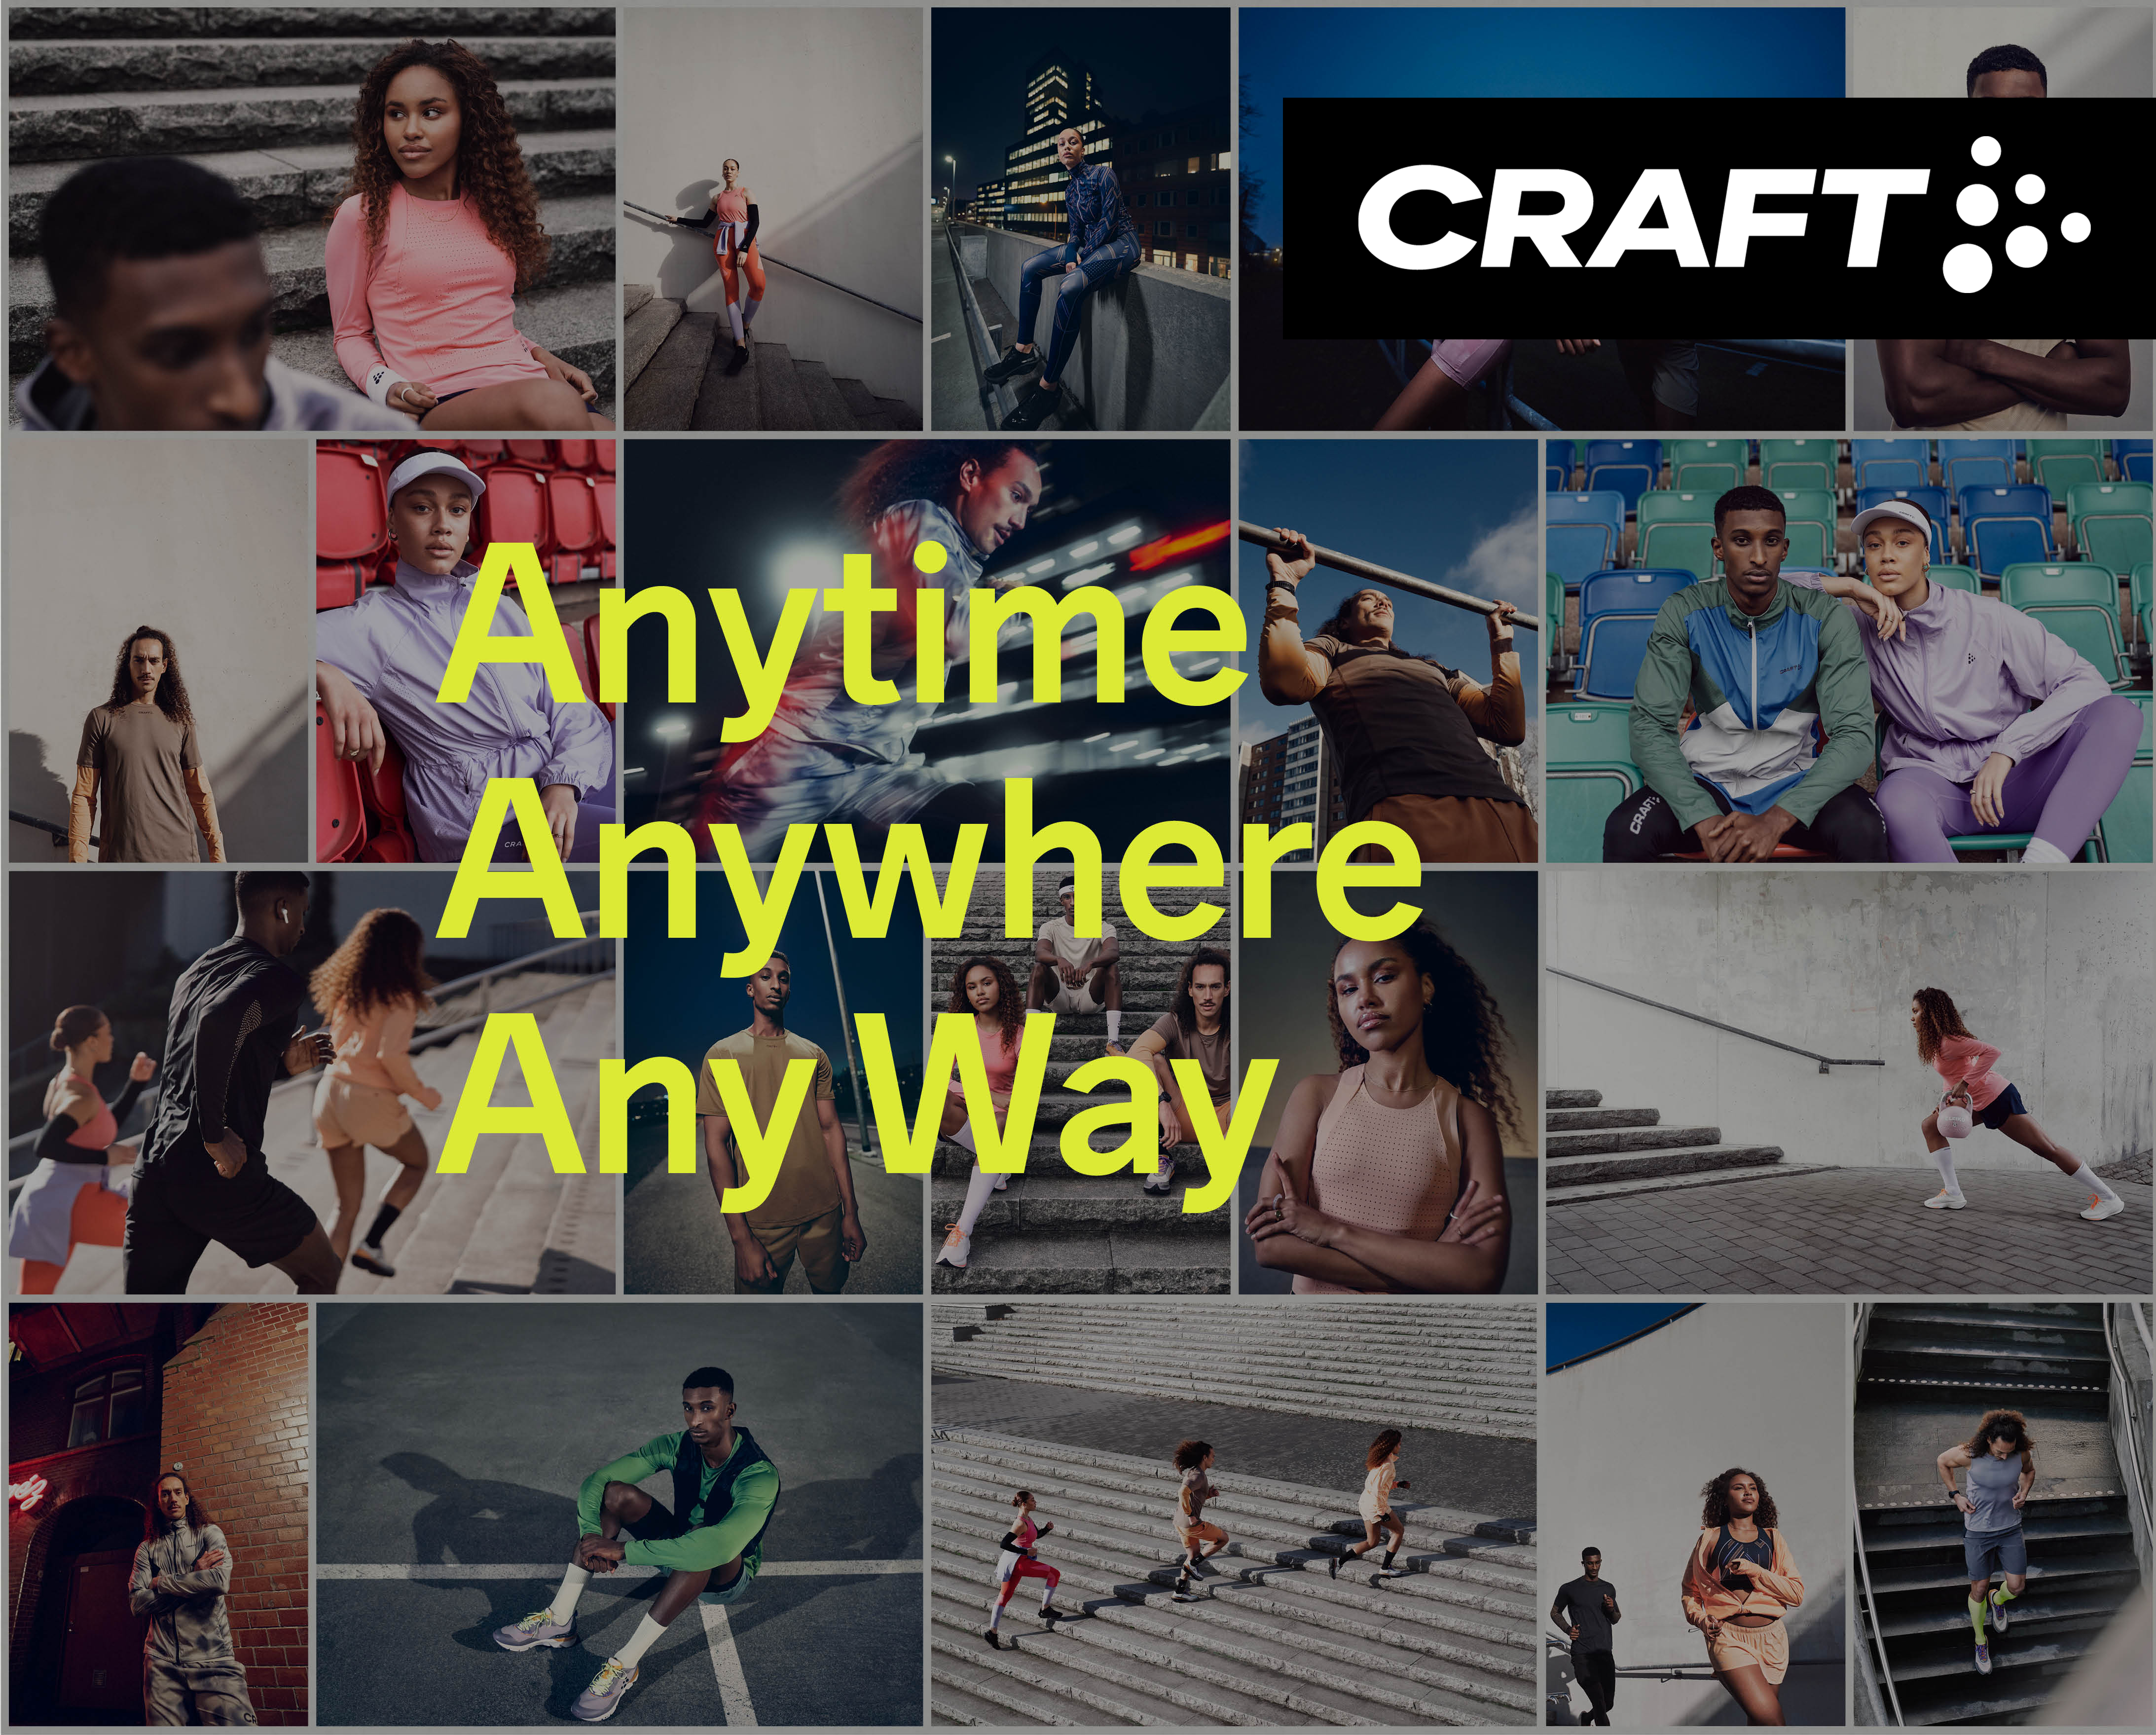 Craft - Anytime, anywhere, any way